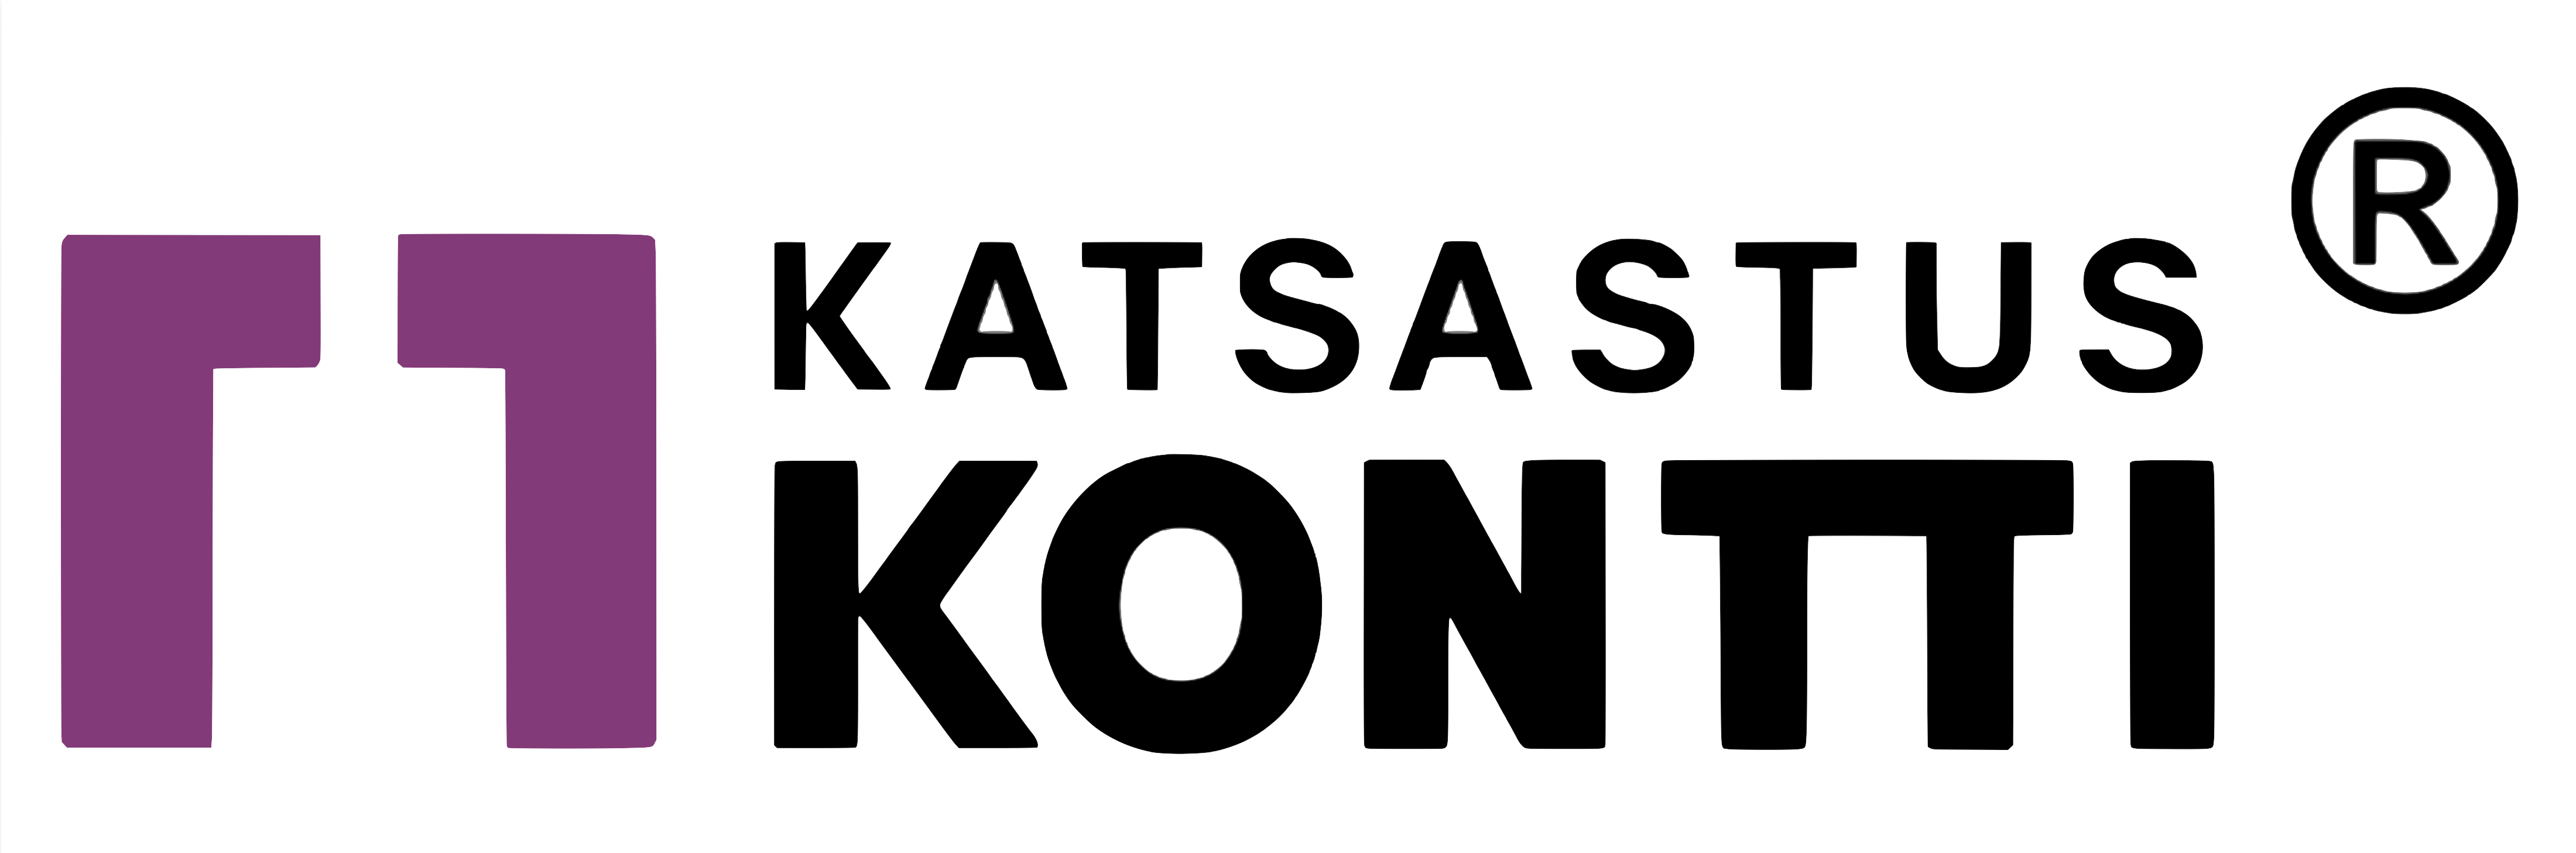 Katsastuskontti Kauppakeskus Kaari Helsinki -logo